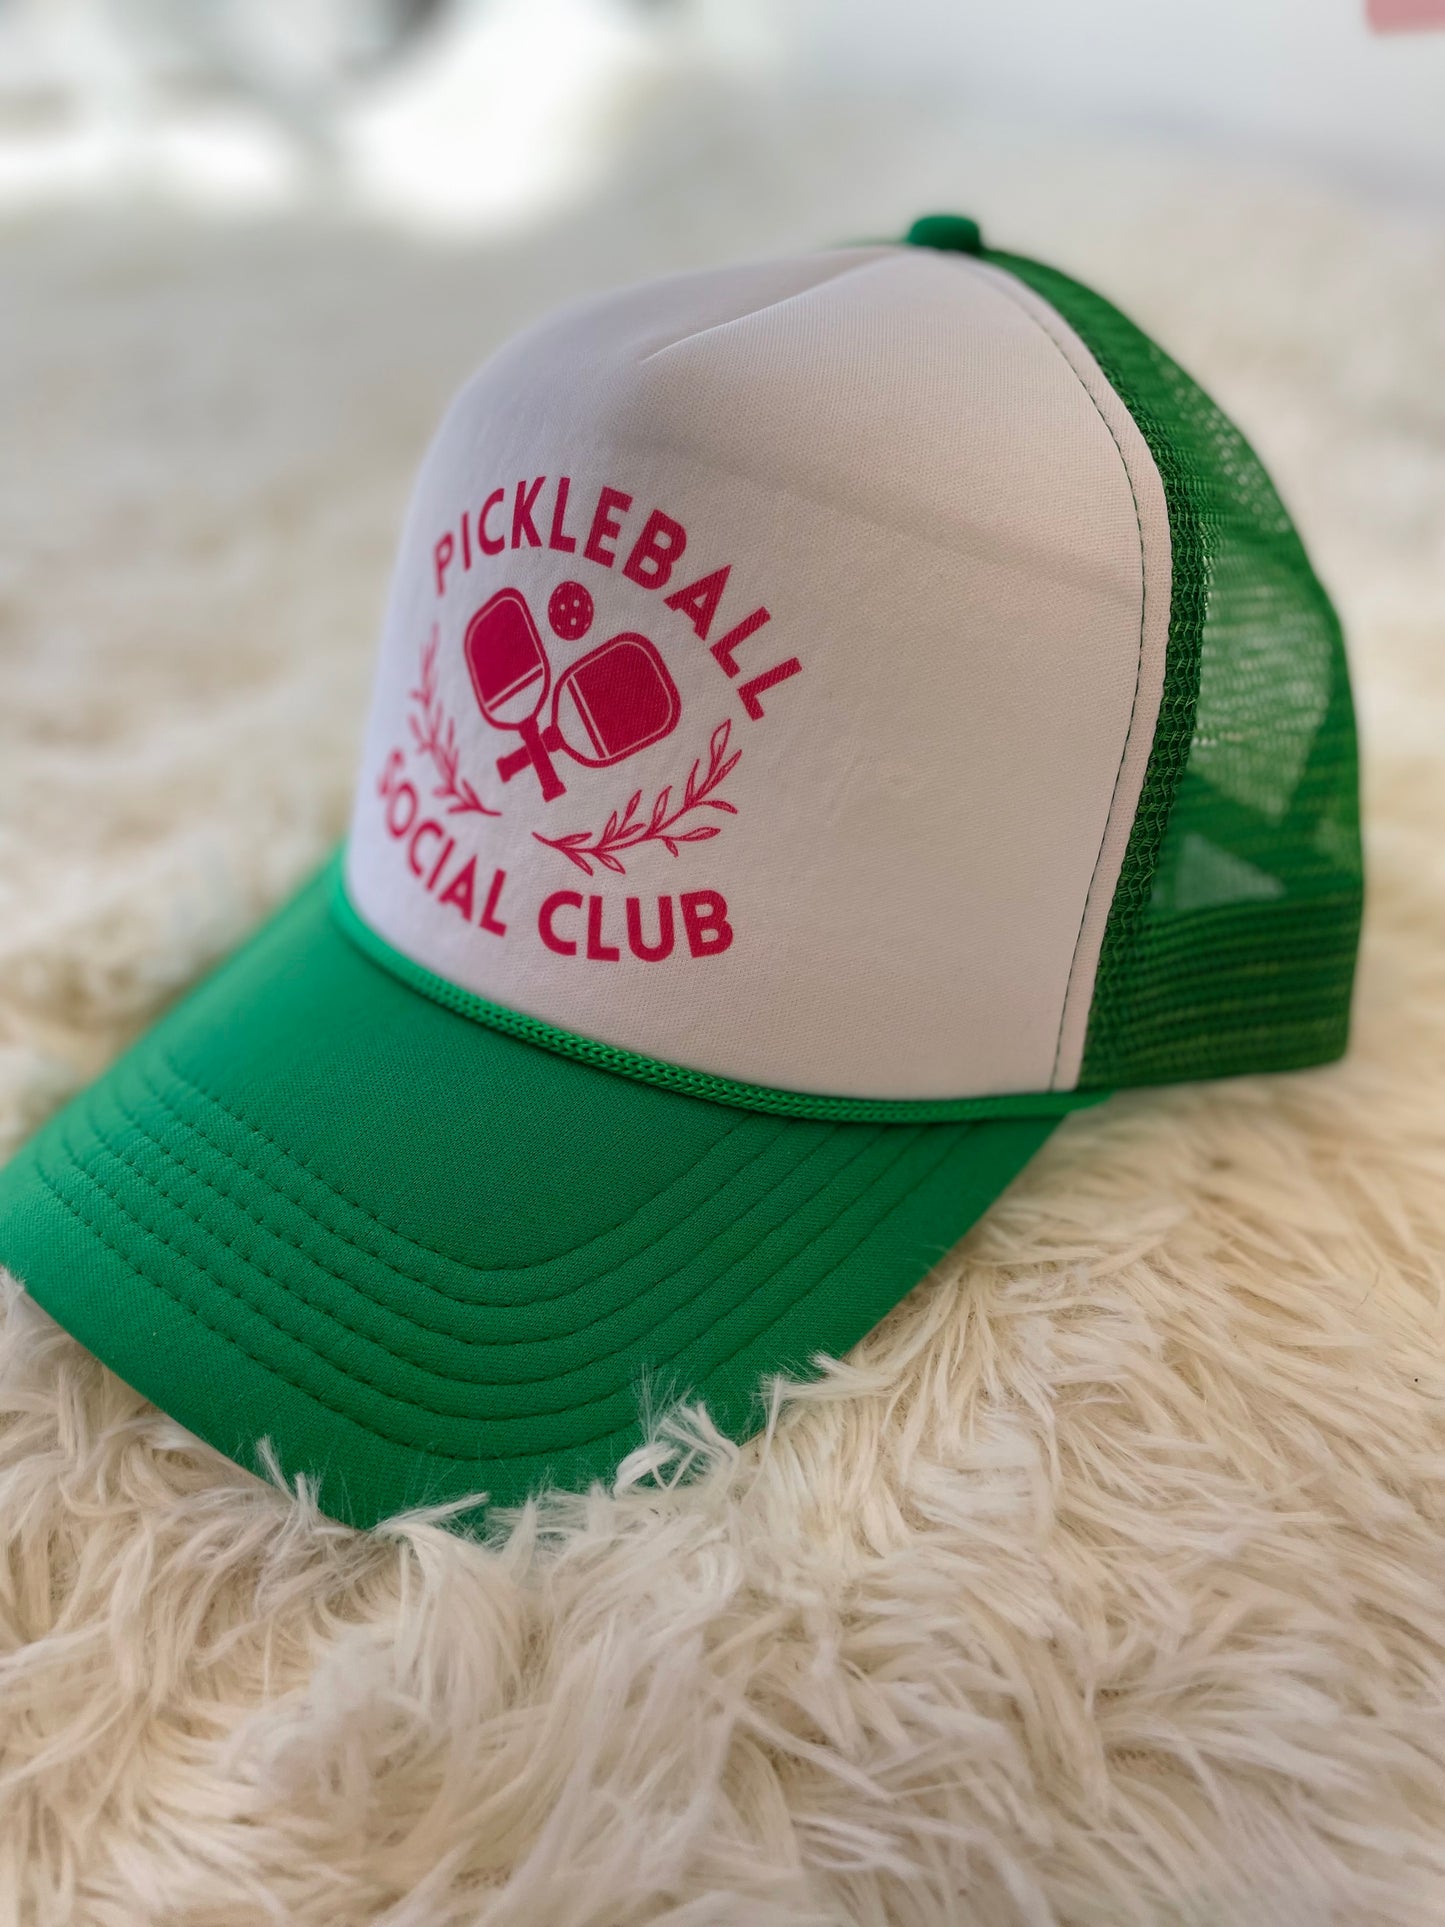 Pickleball Social Club - Sublimated